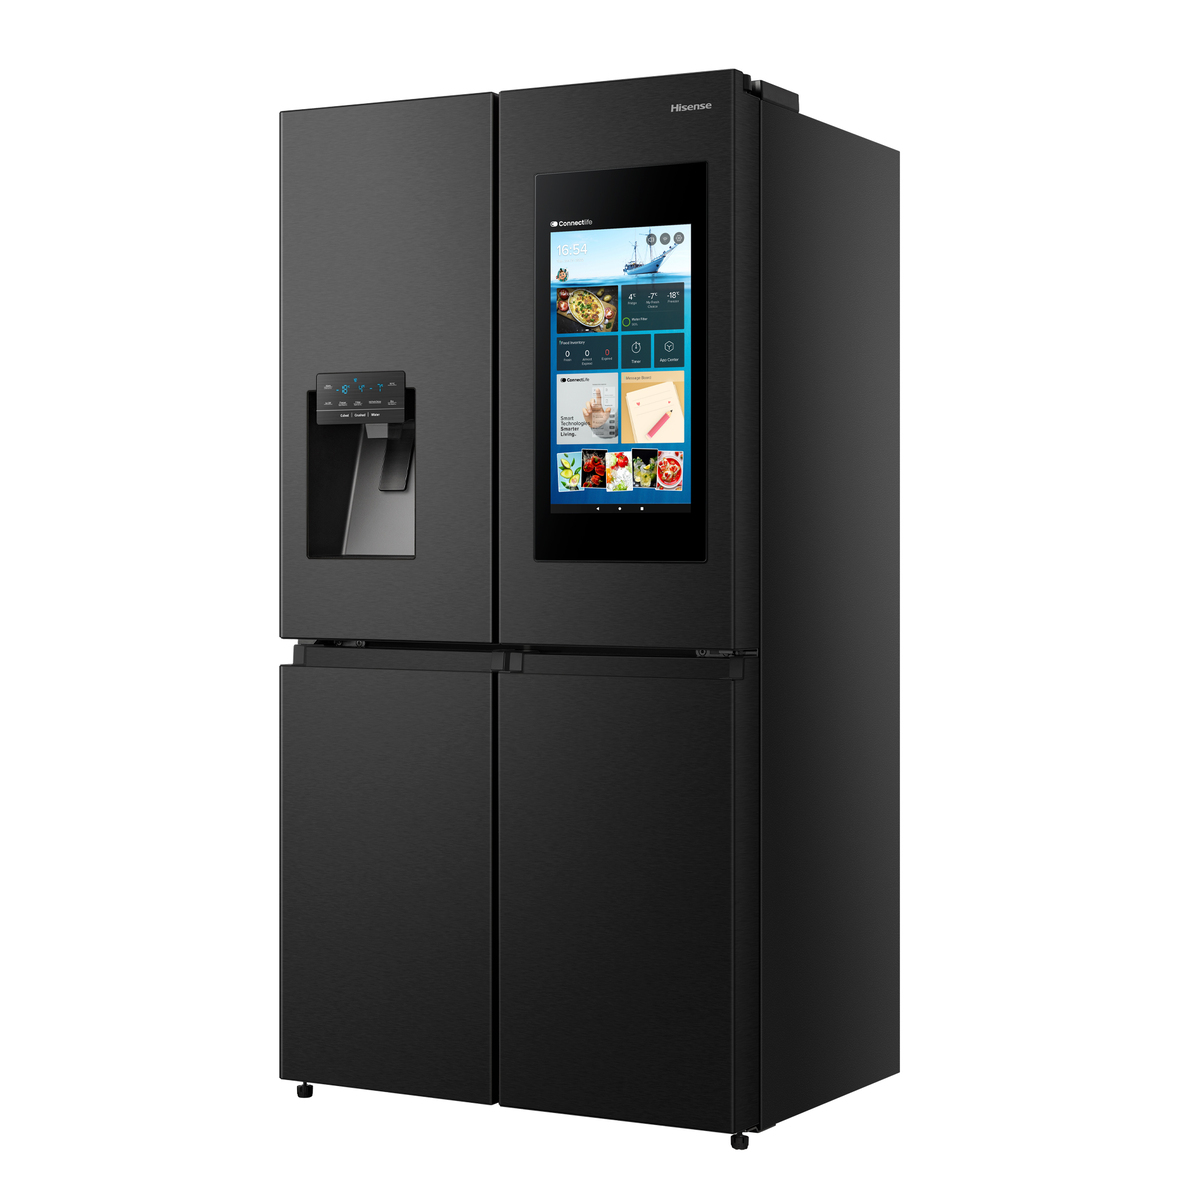 Hisense French Door Smart Screen Refrigerator with Water Dispenser & Ice Maker, 759 L, Black, RQ759N4iBU1